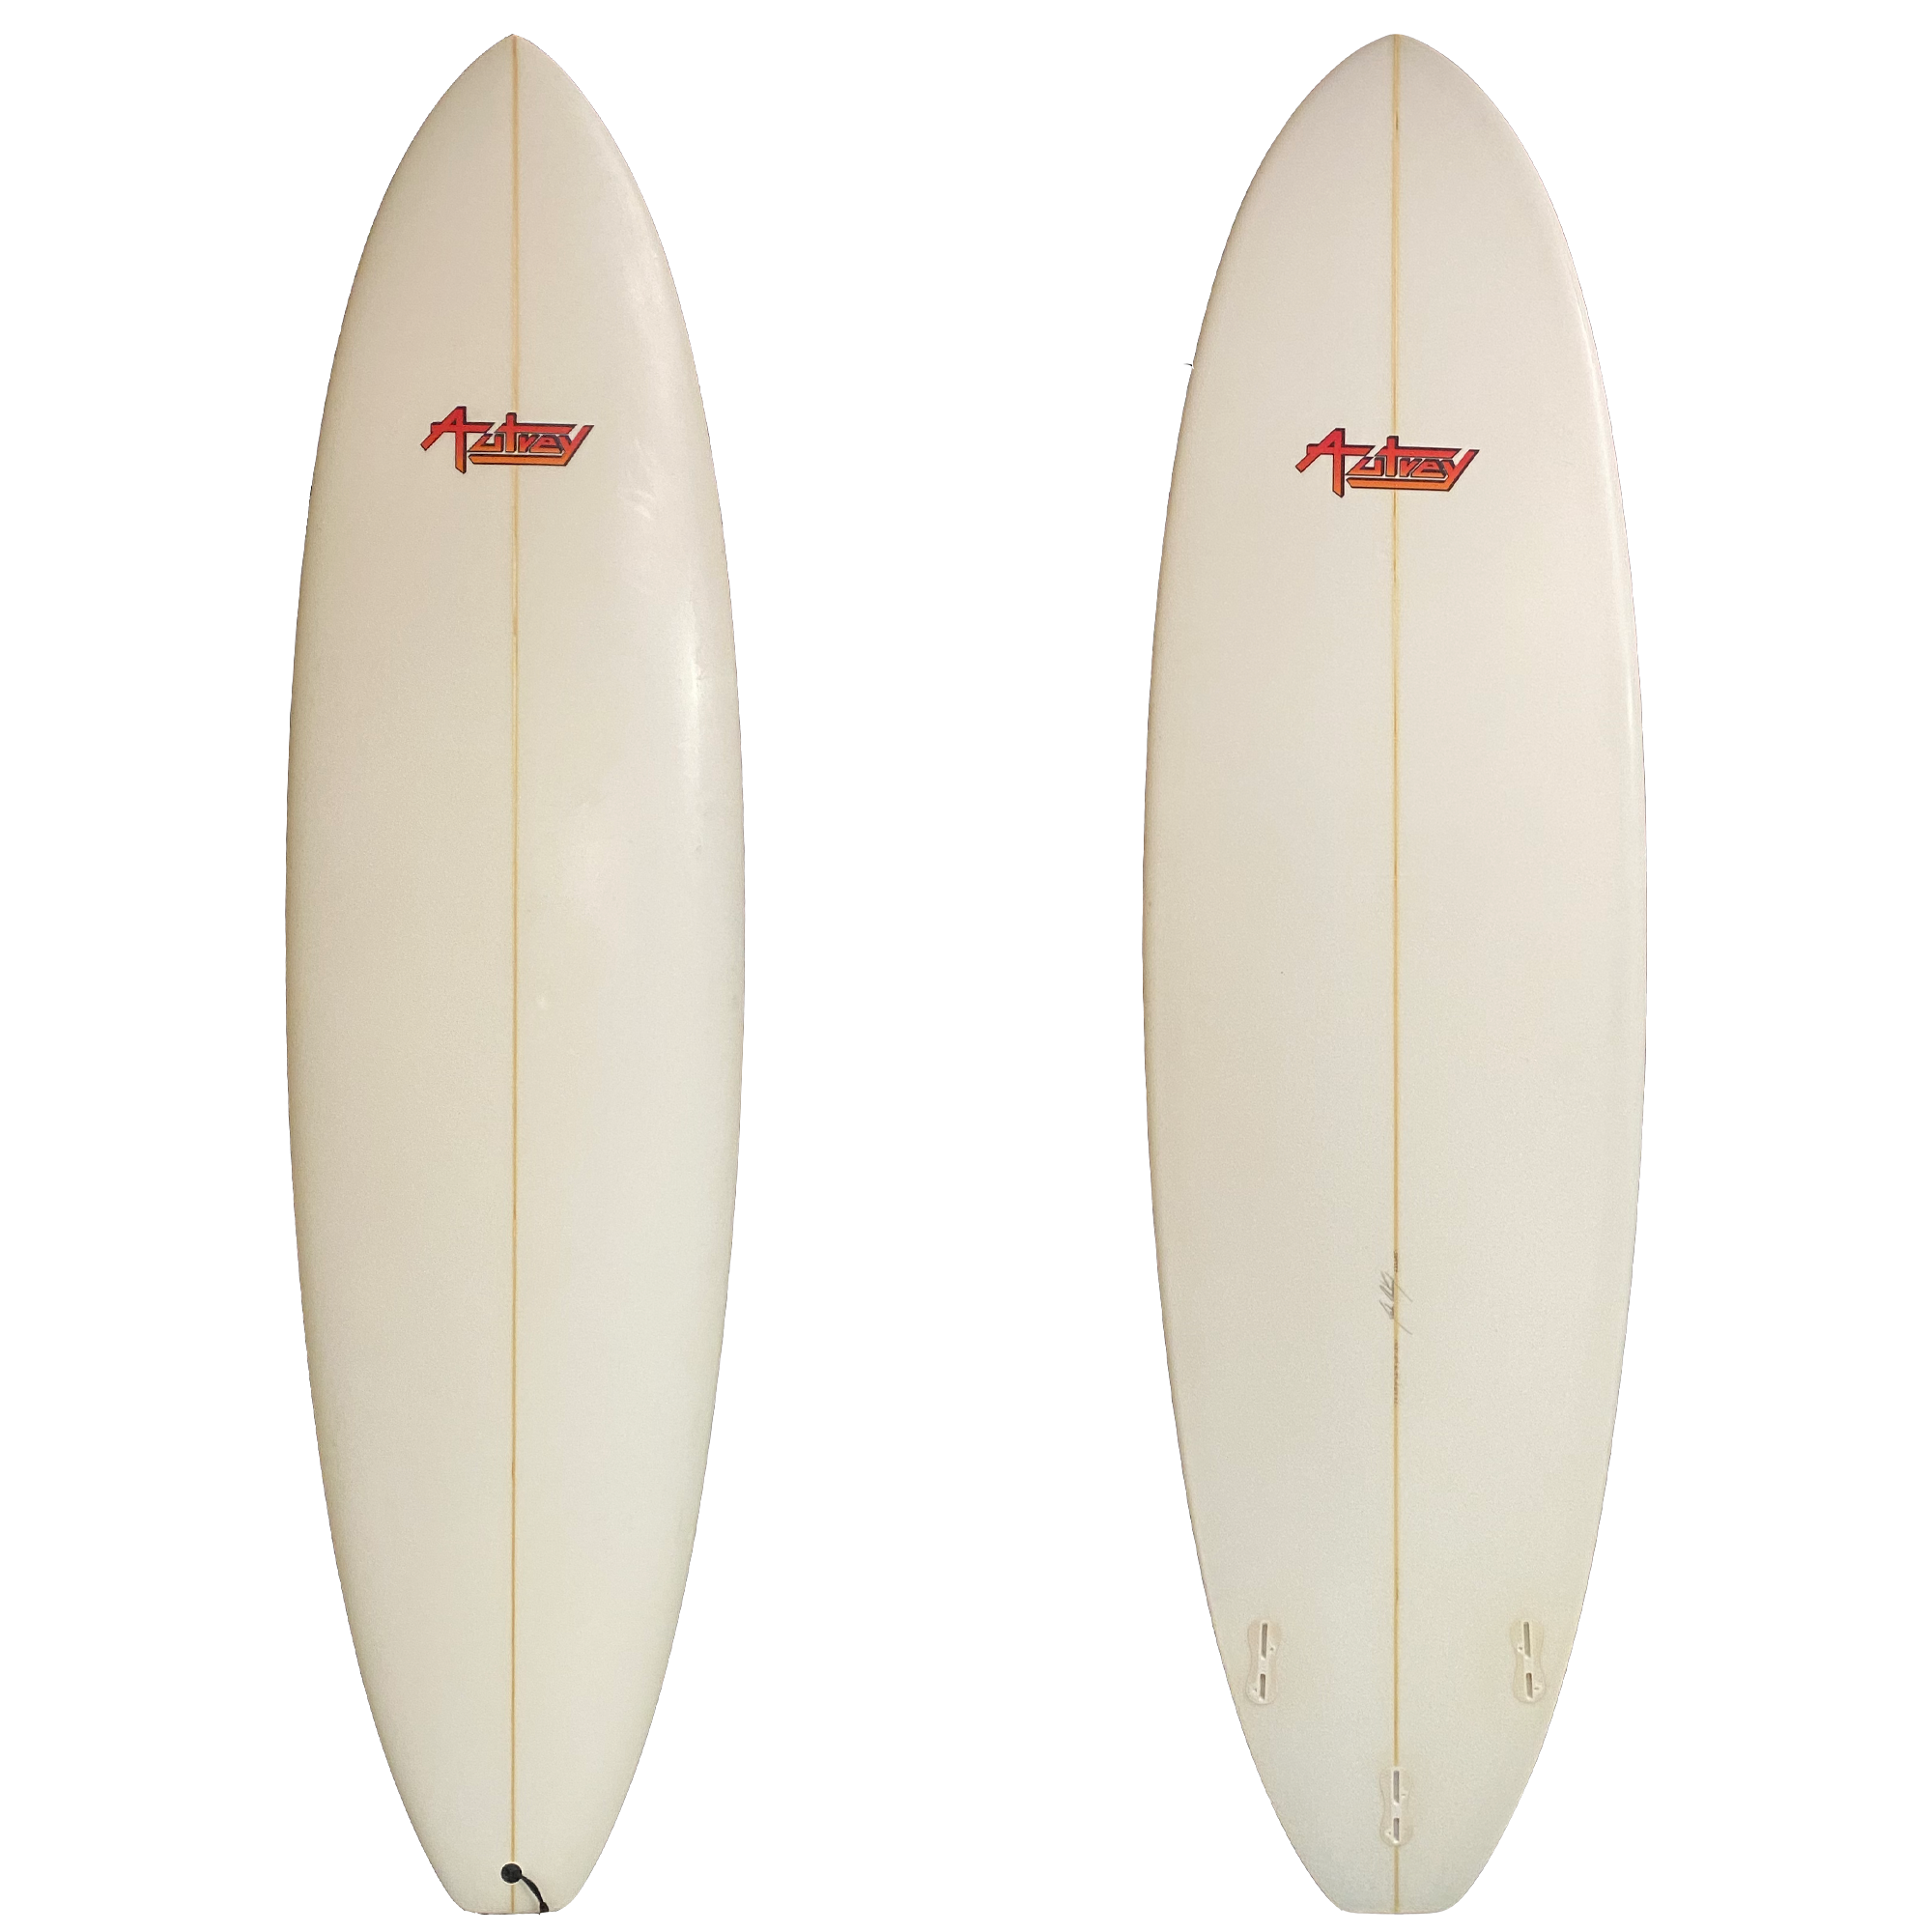 Autrey 7'2 Consignment Surfboard